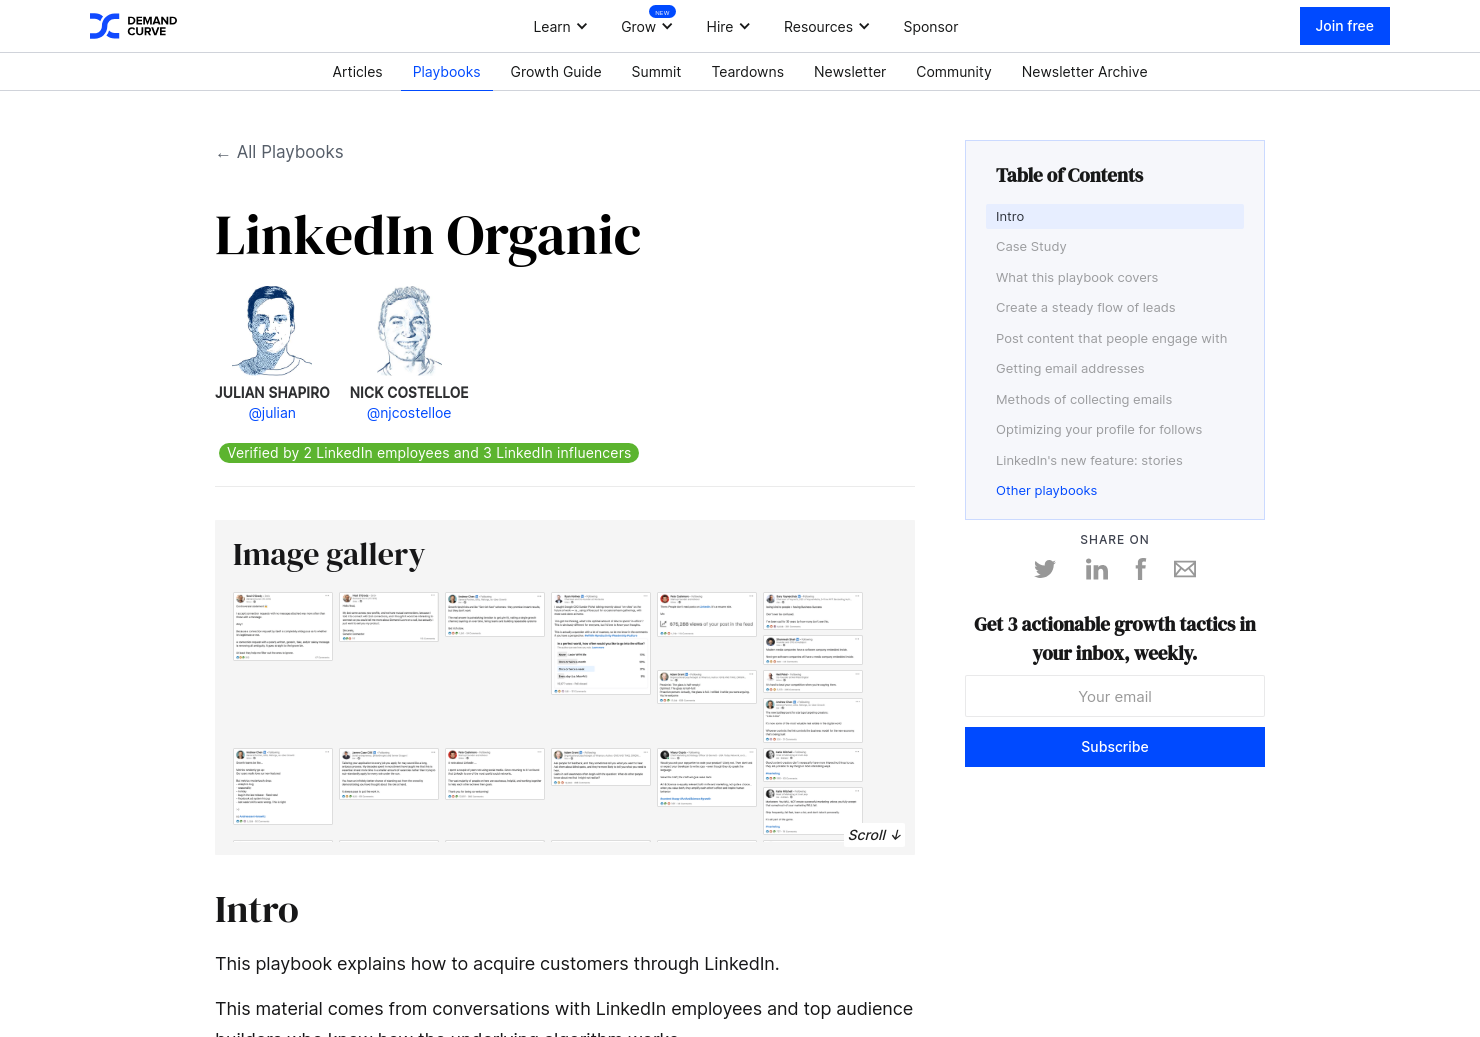 LinkedIn Organic: Growth Playbook